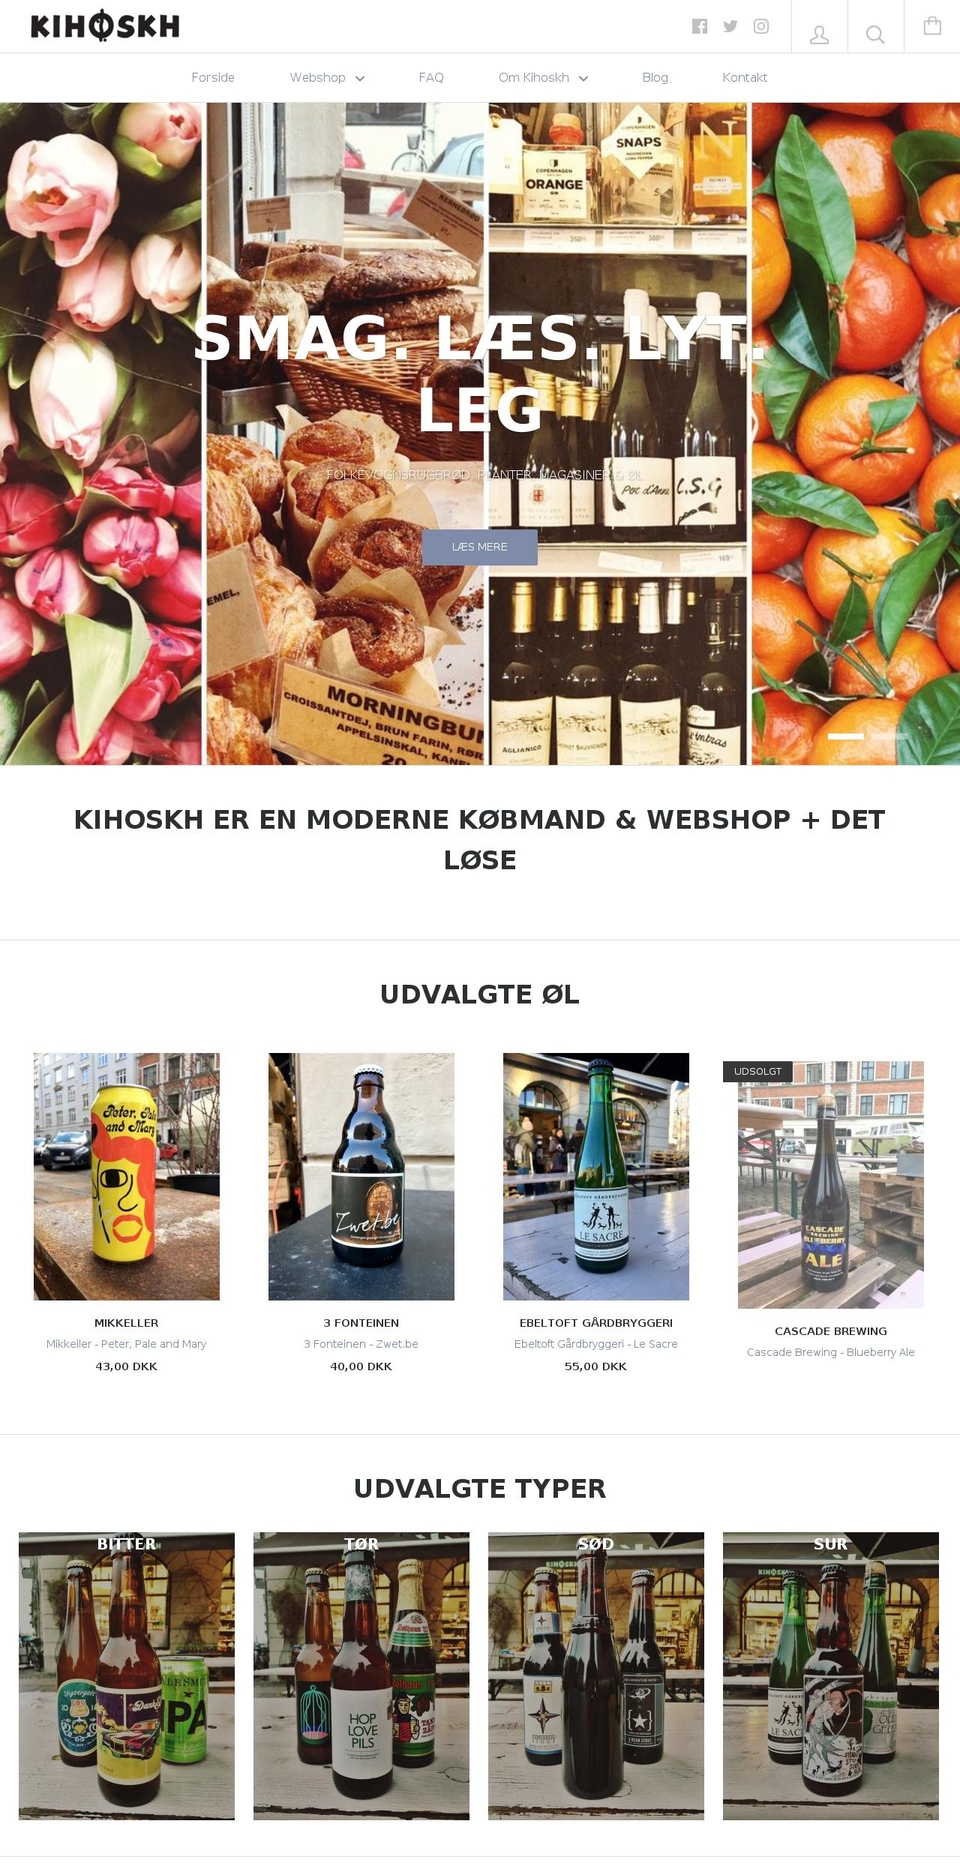 Venue Shopify theme site example kihoskh.dk